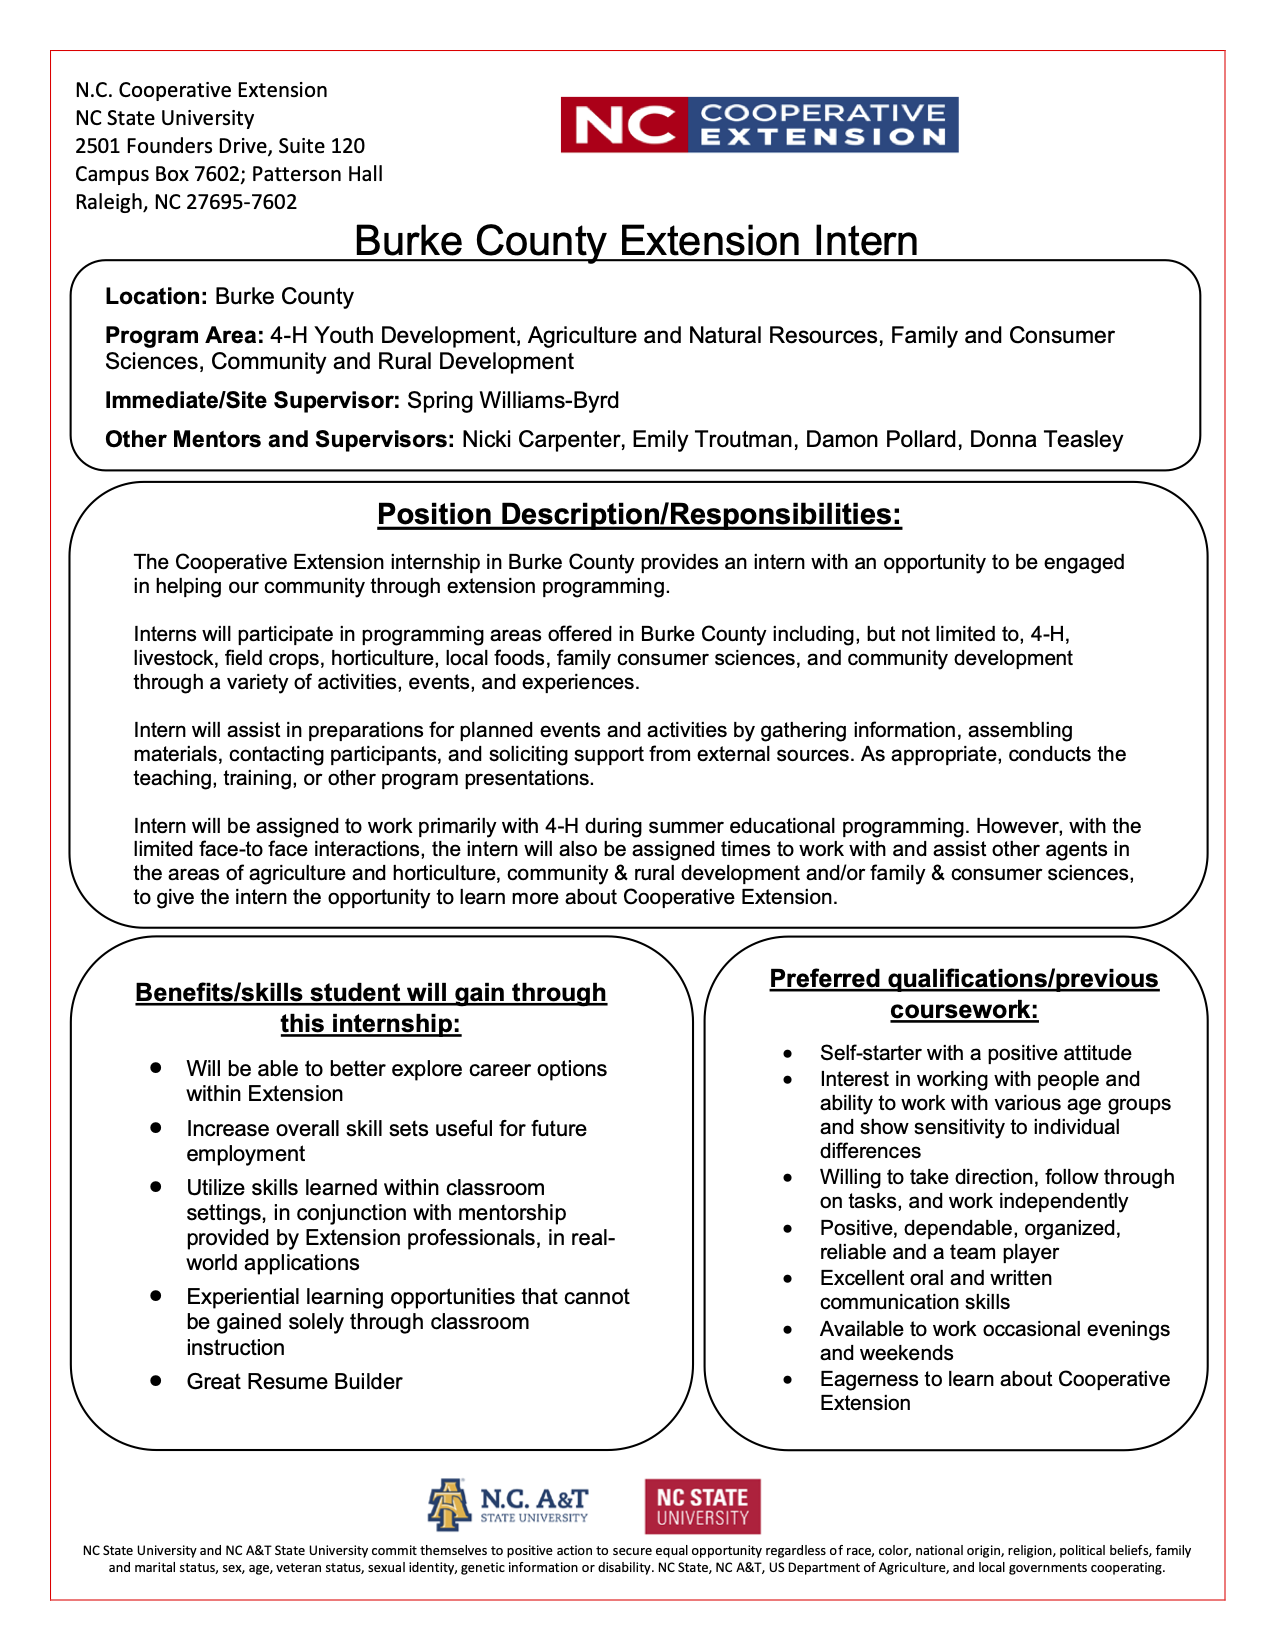 Burke County Extension Intern job description